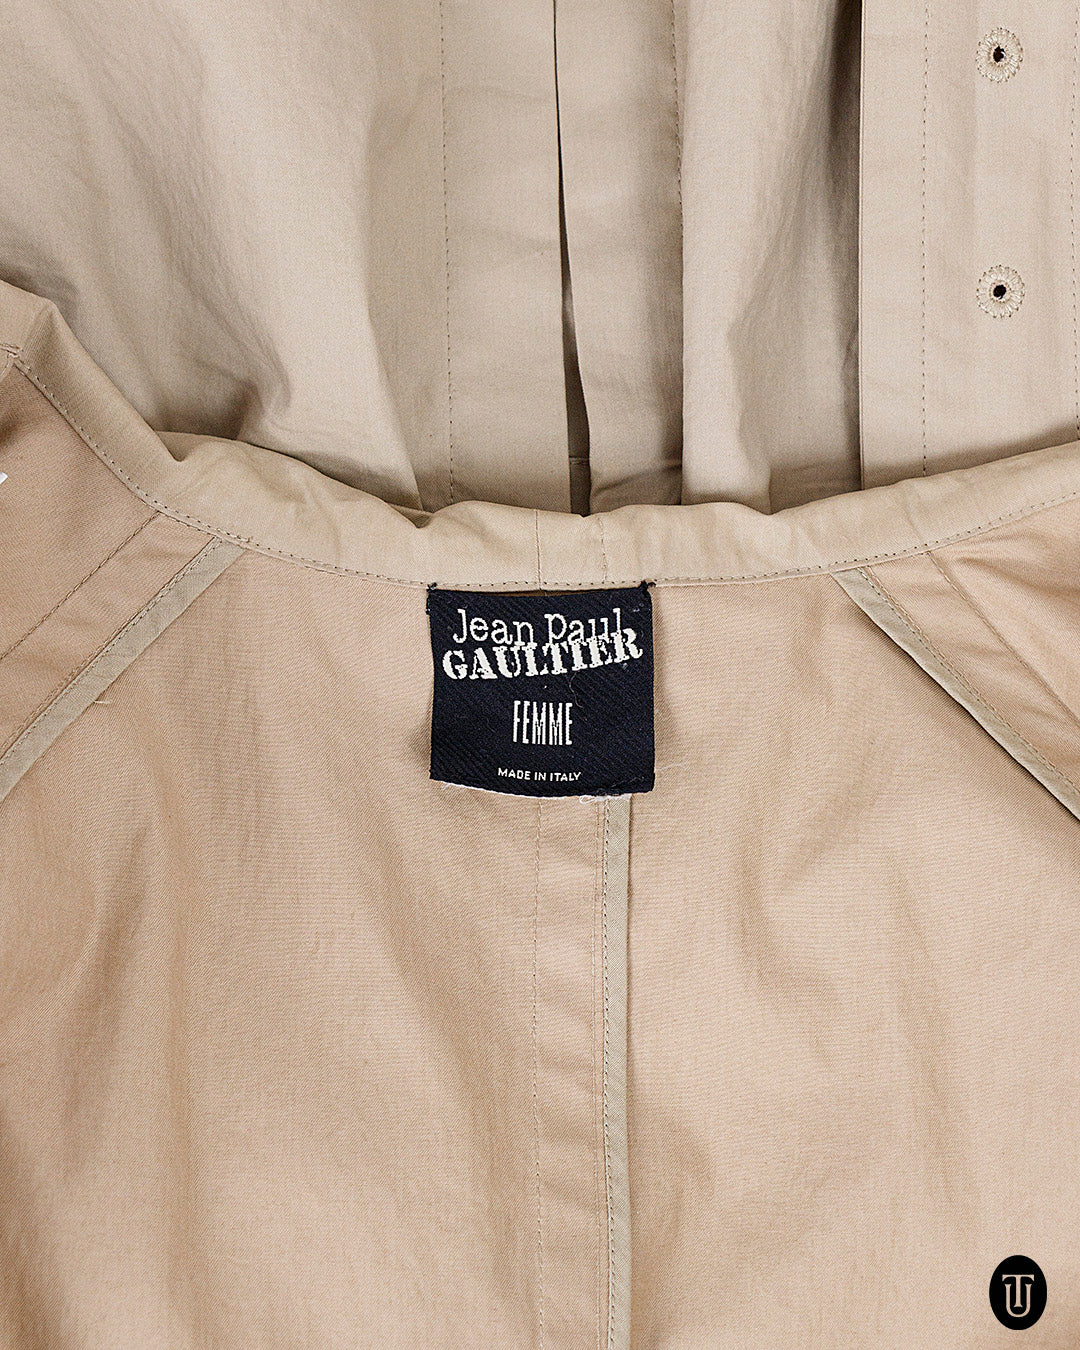 A 2000s Jean Paul Gaultier Femme oversized coat